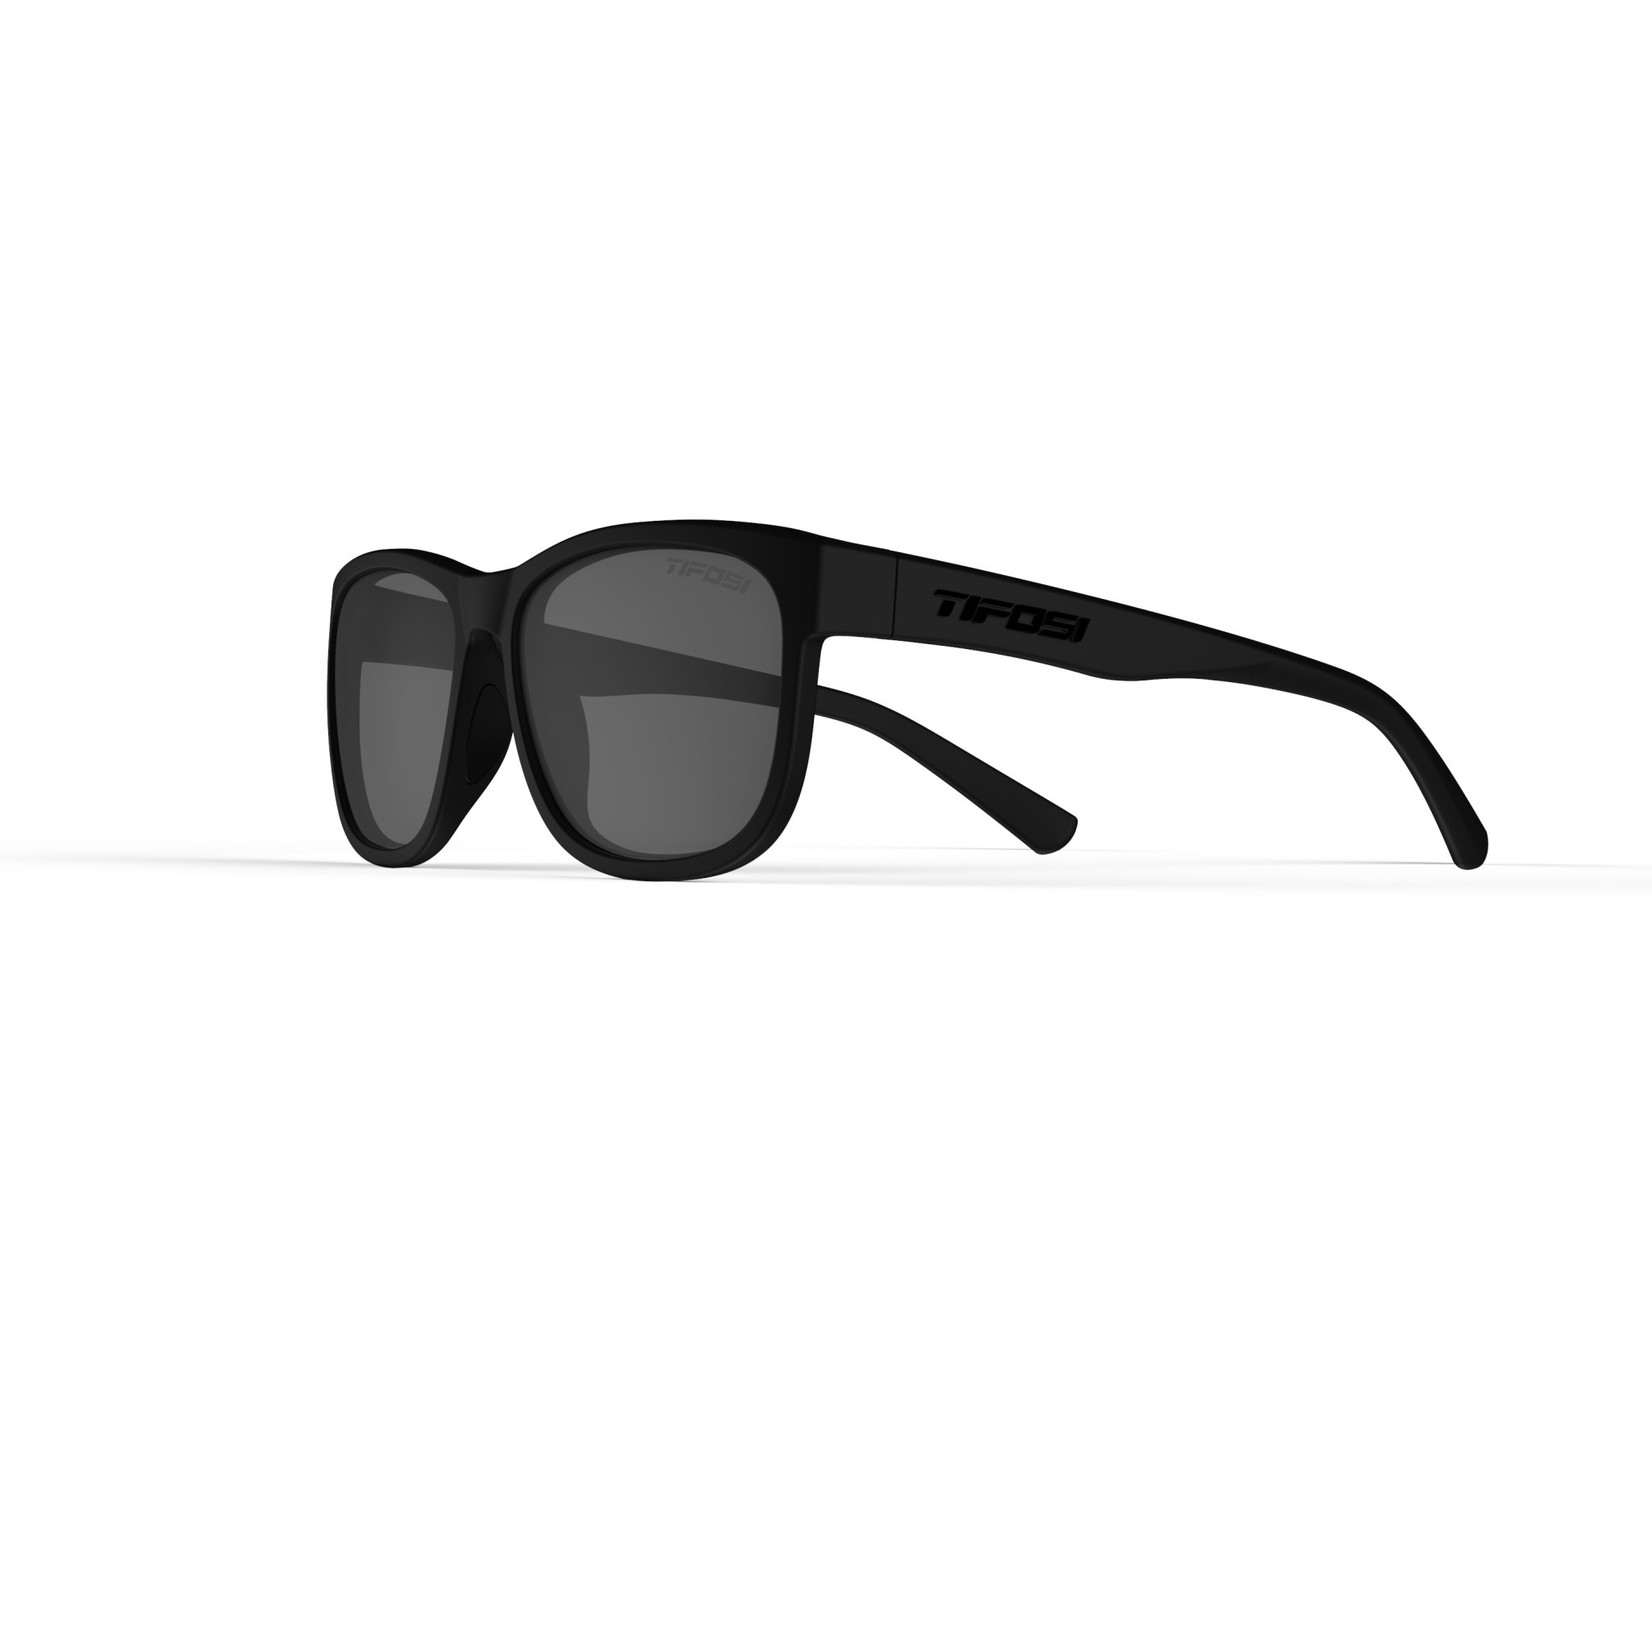 Tifosi Tifosi Swank XL Sunglasses